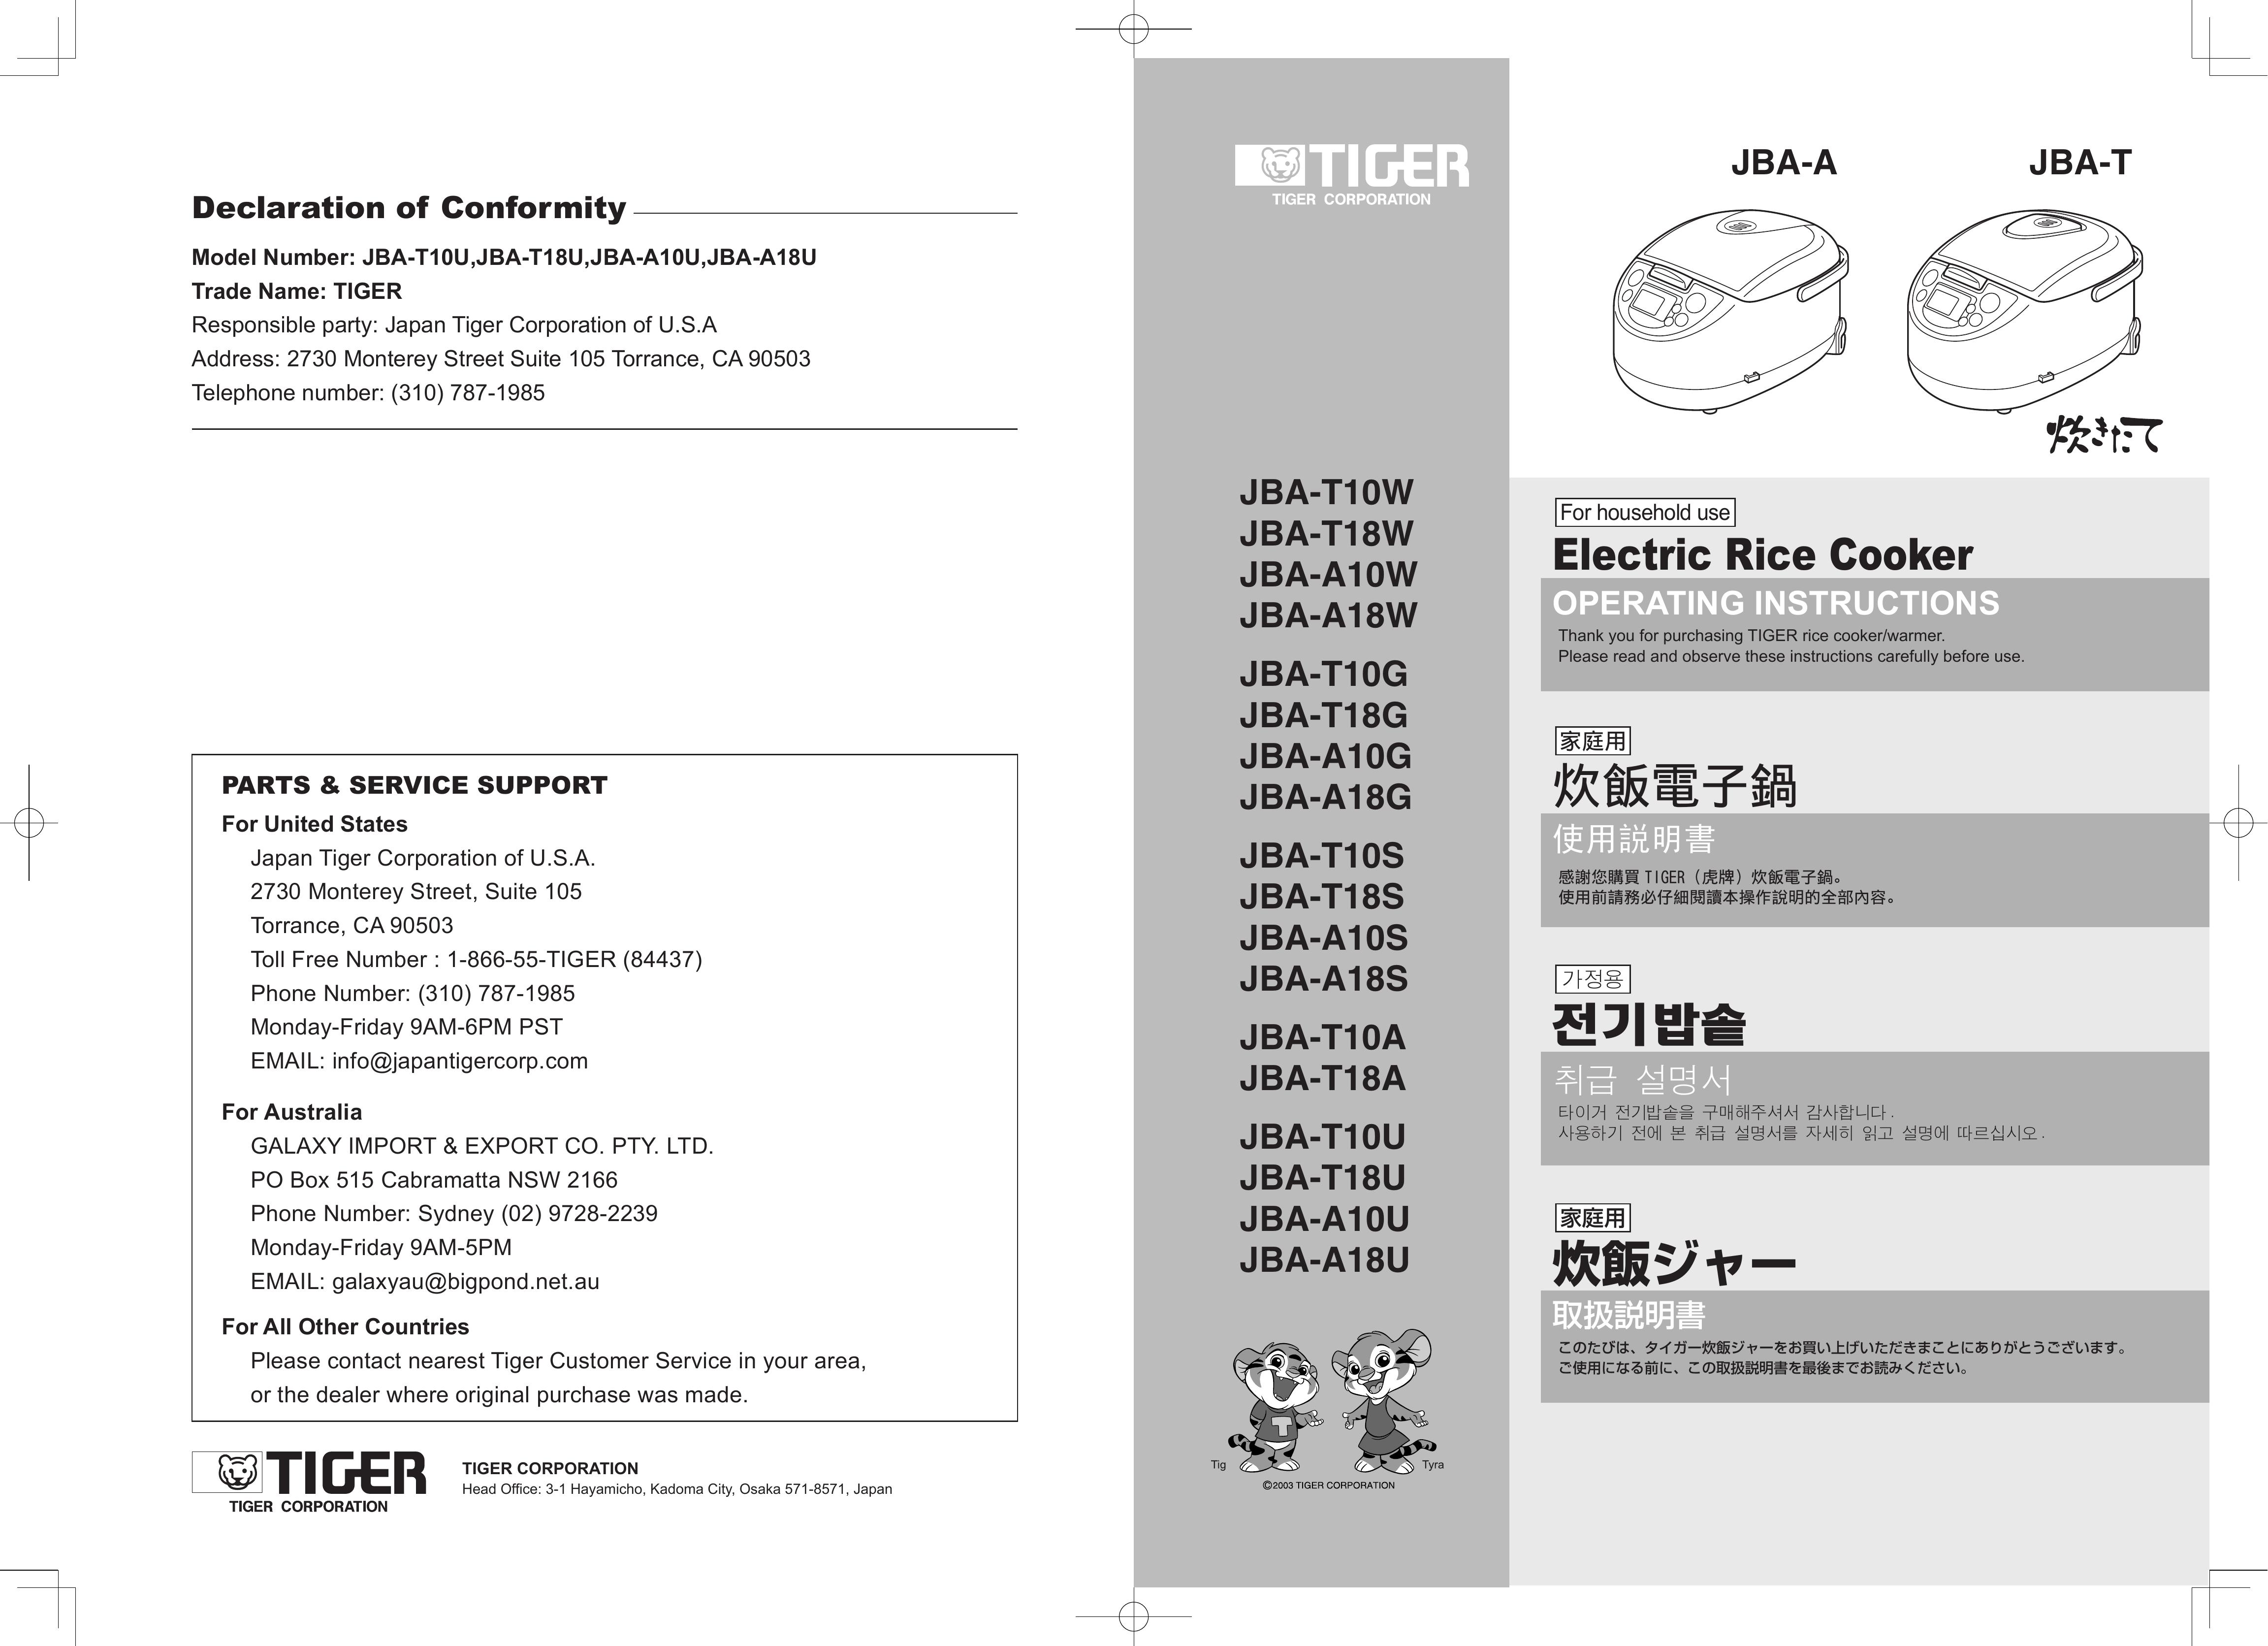 Tiger Products Co., Ltd JBA-T18A Rice Cooker User Manual